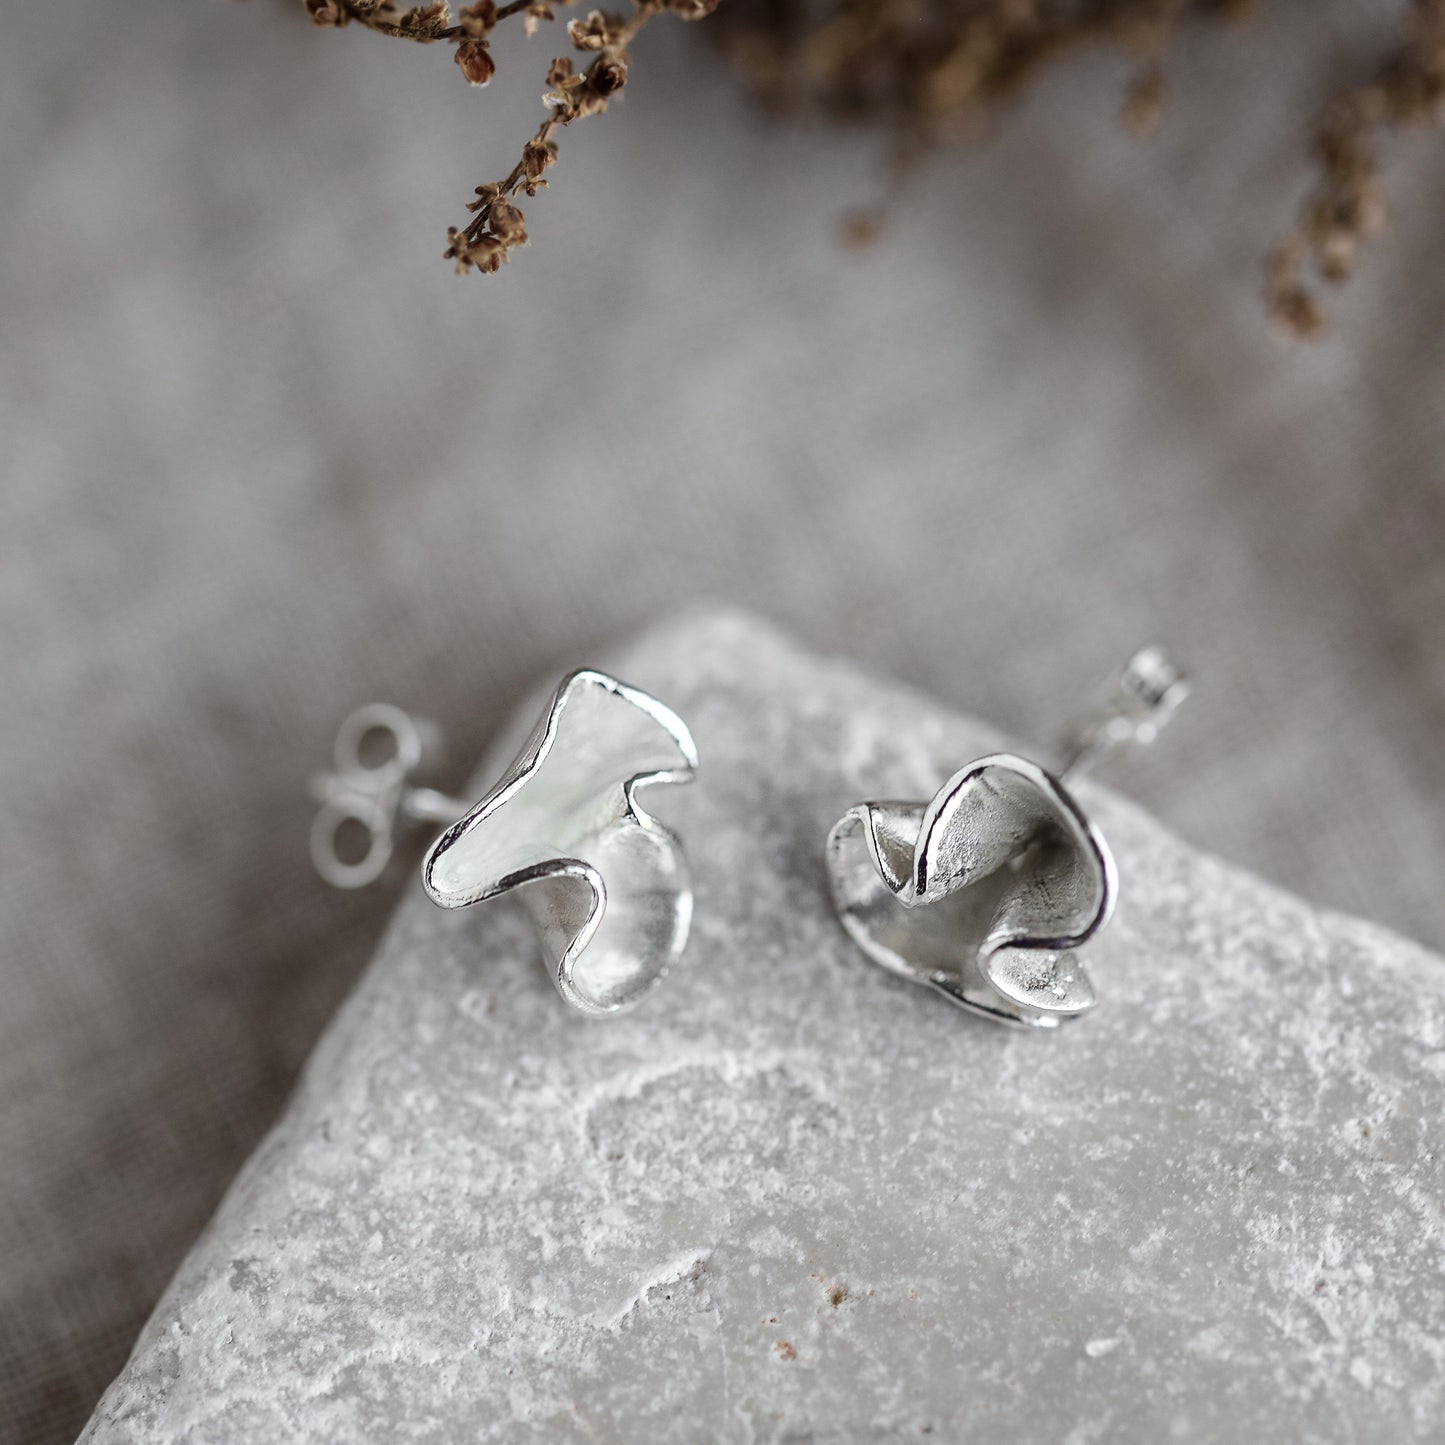 Silver Blossom Studs Earrings - Small Silver Earrings Handmade by Anna Calvert Jewellery in the UK